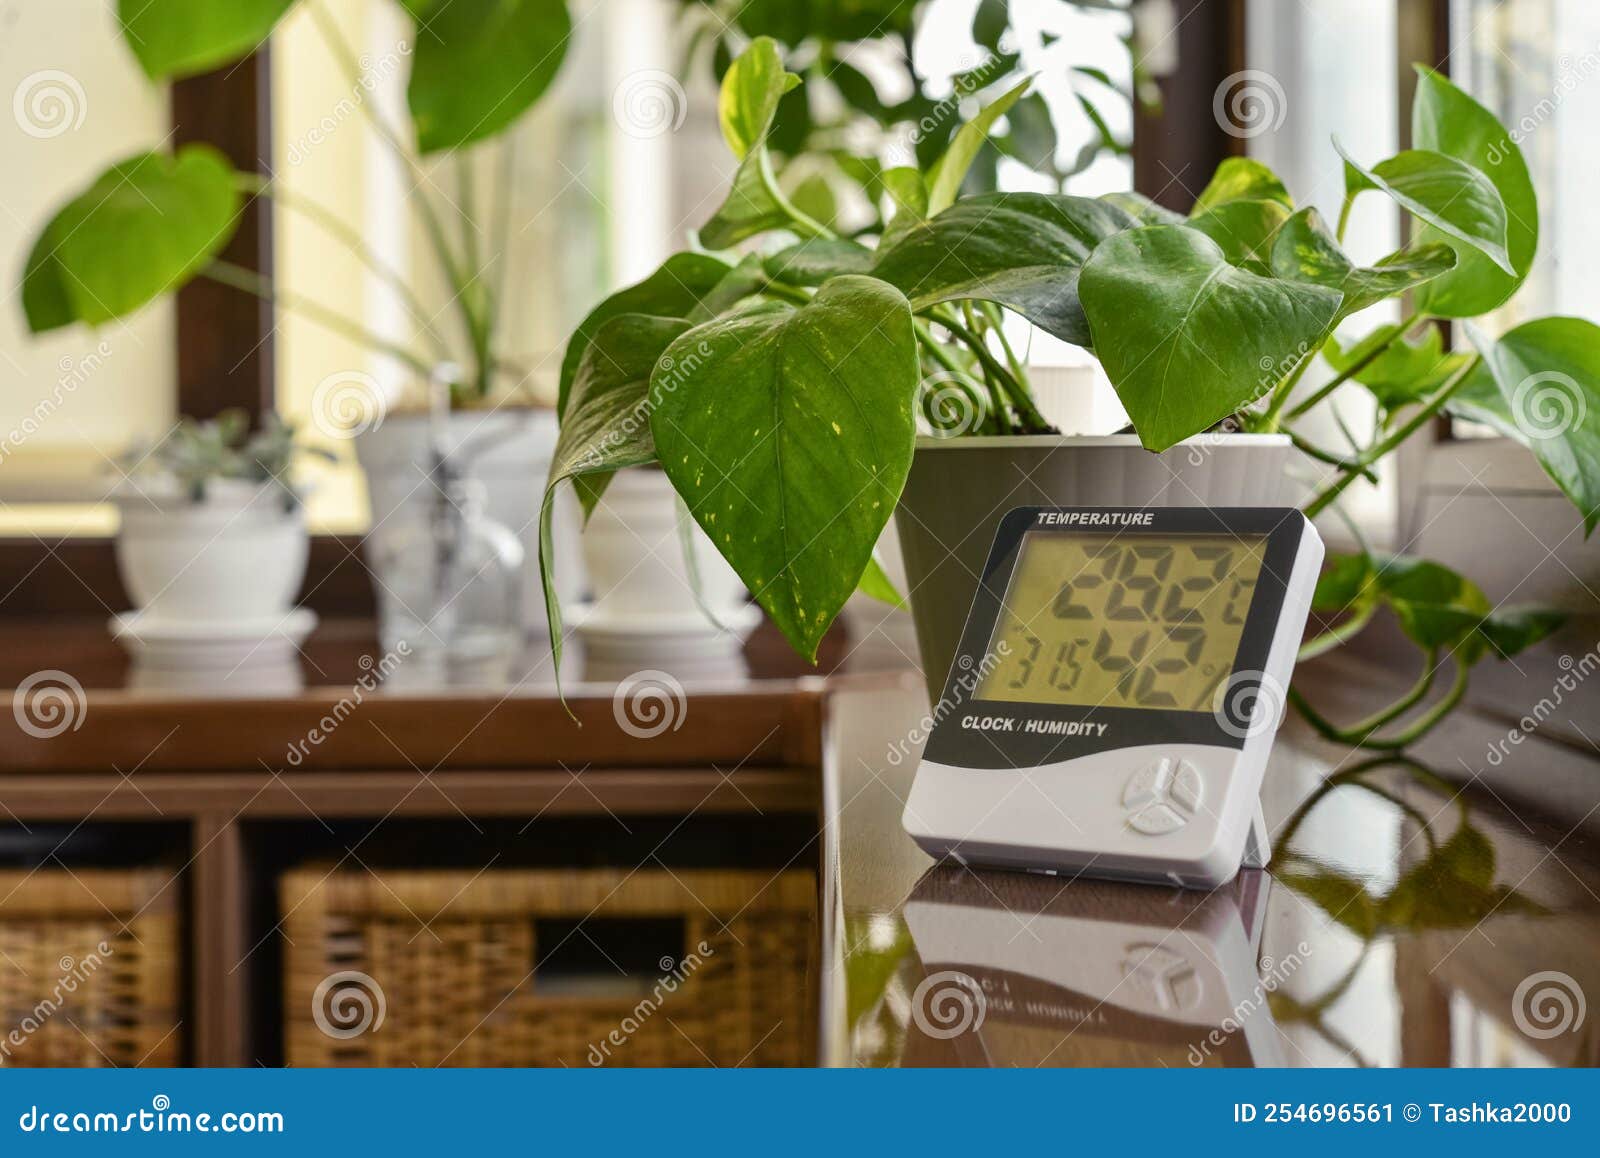 https://thumbs.dreamstime.com/z/thermometer-hygrometer-measuring-optimum-temperature-humidity-house-windowsill-houseplants-closeup-254696561.jpg